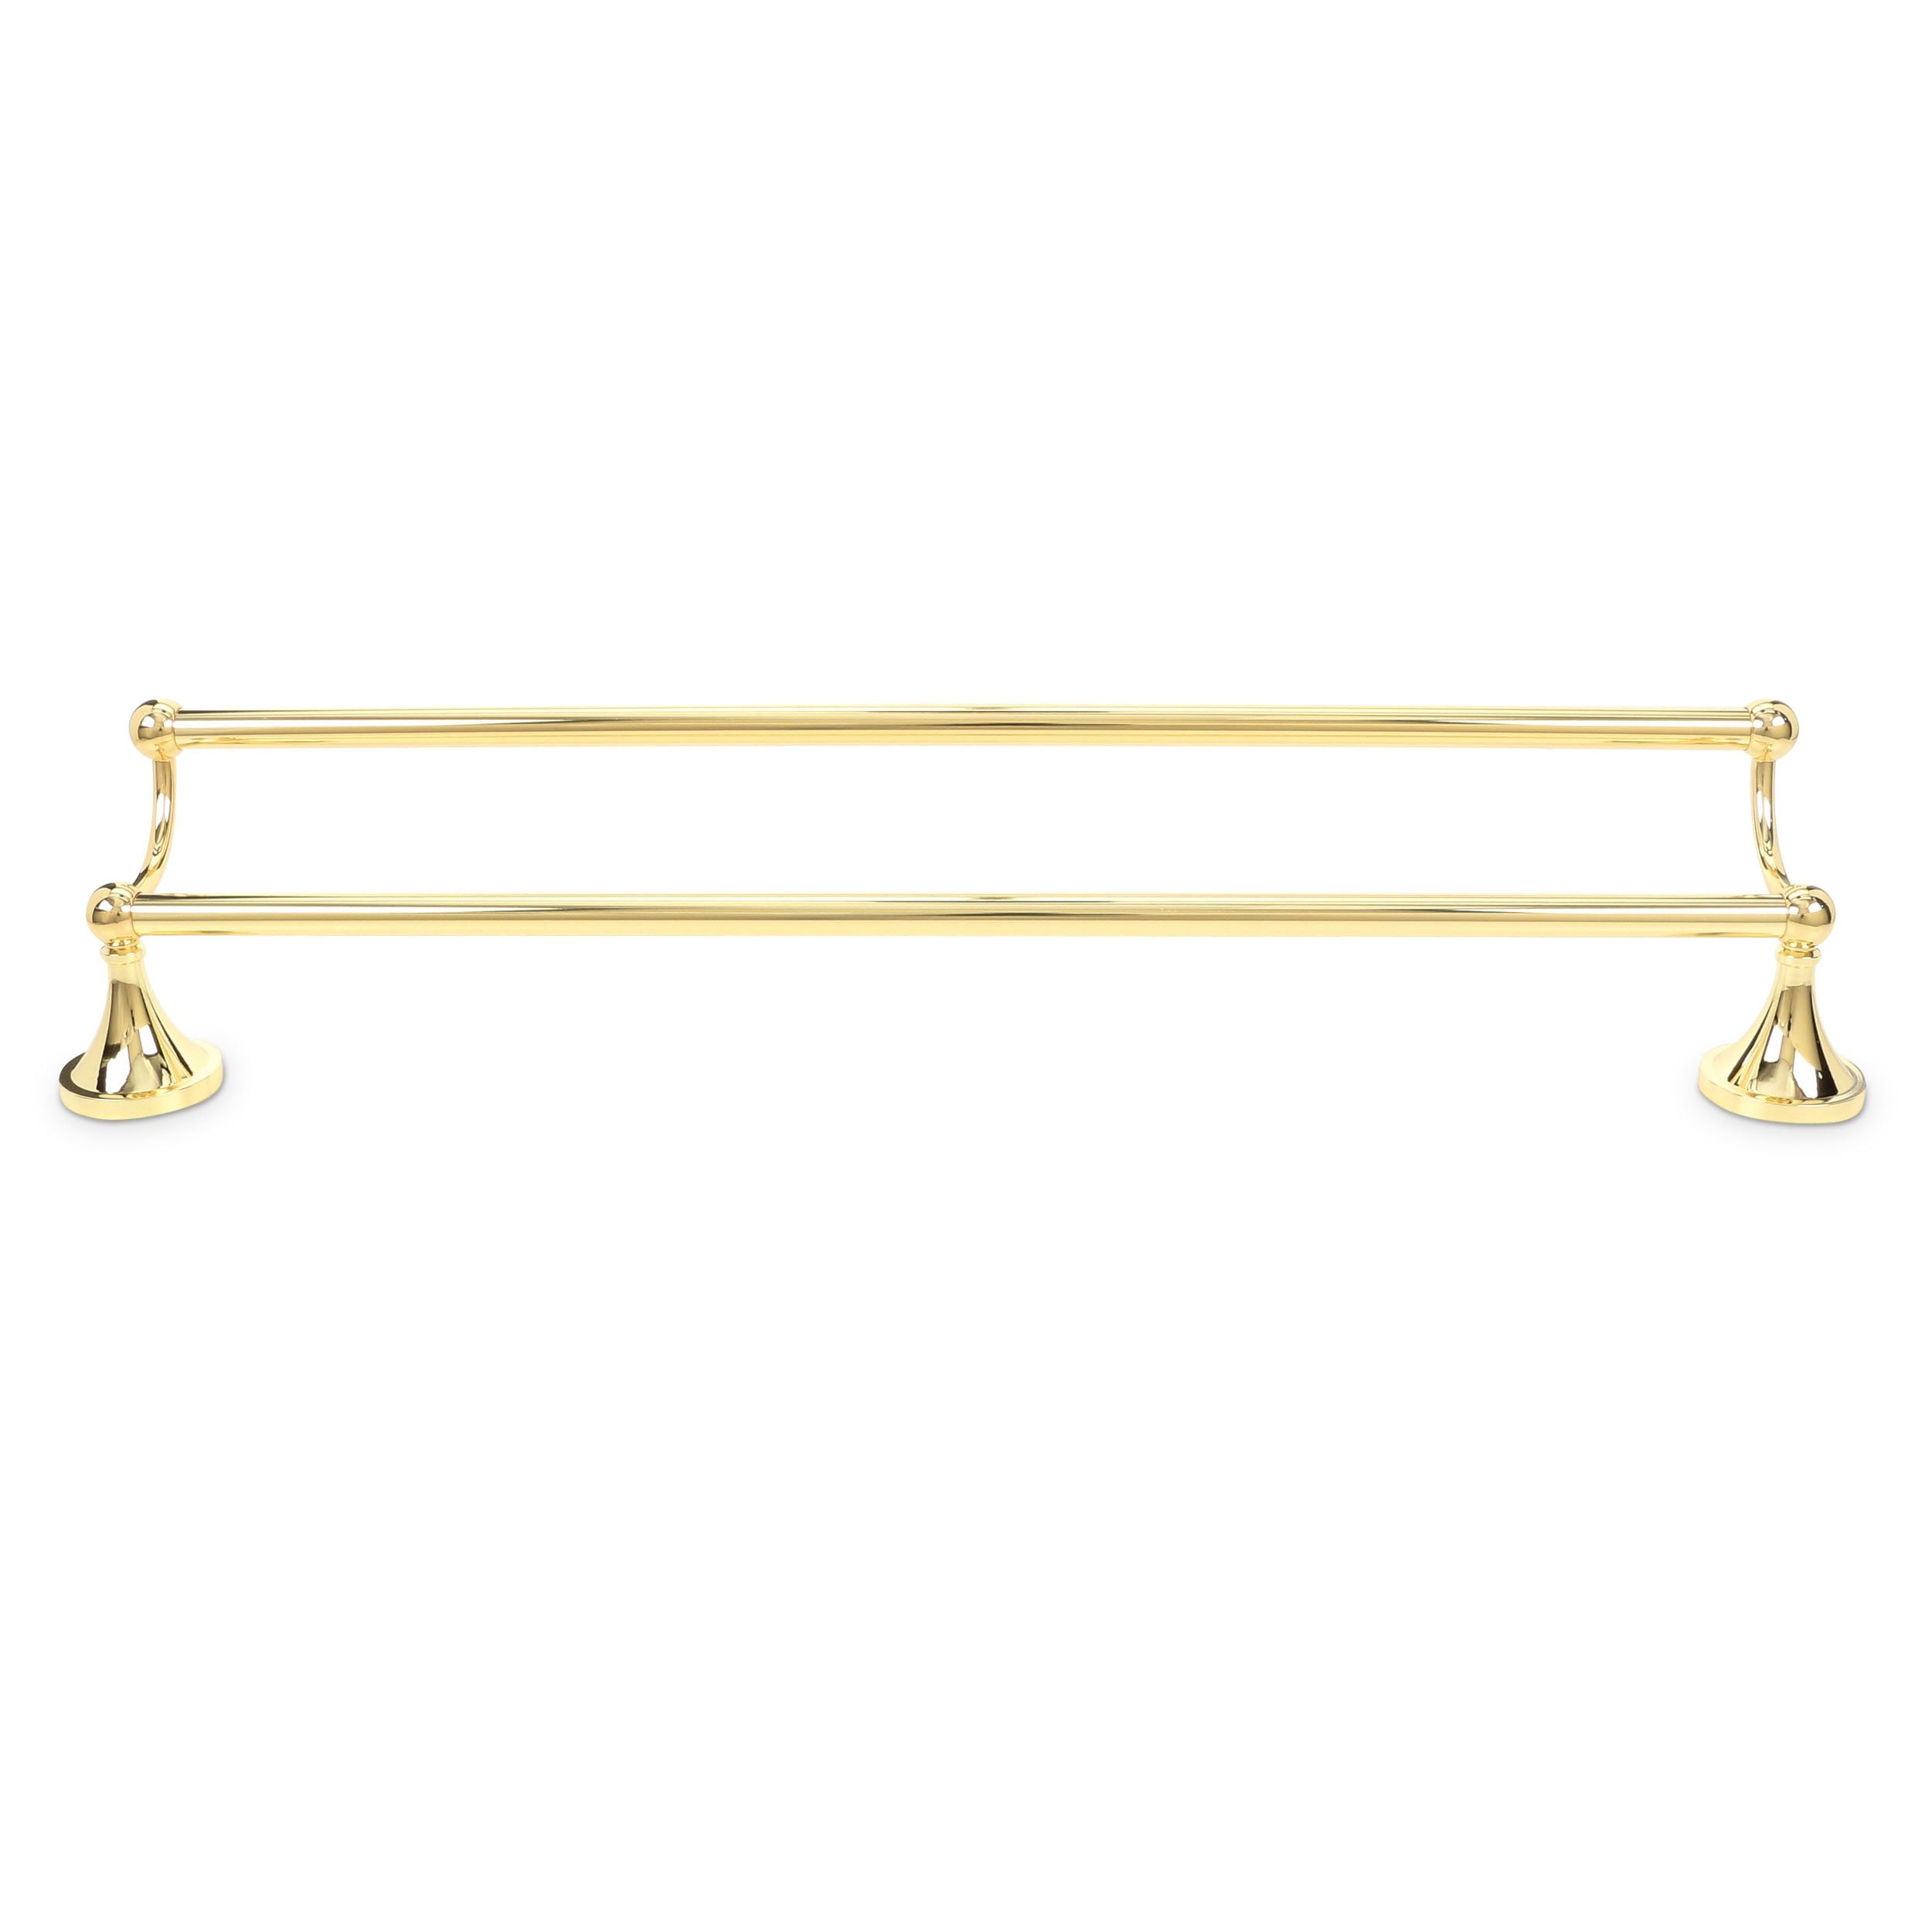 Gatco Hatton Towel Bar Polished Brass 